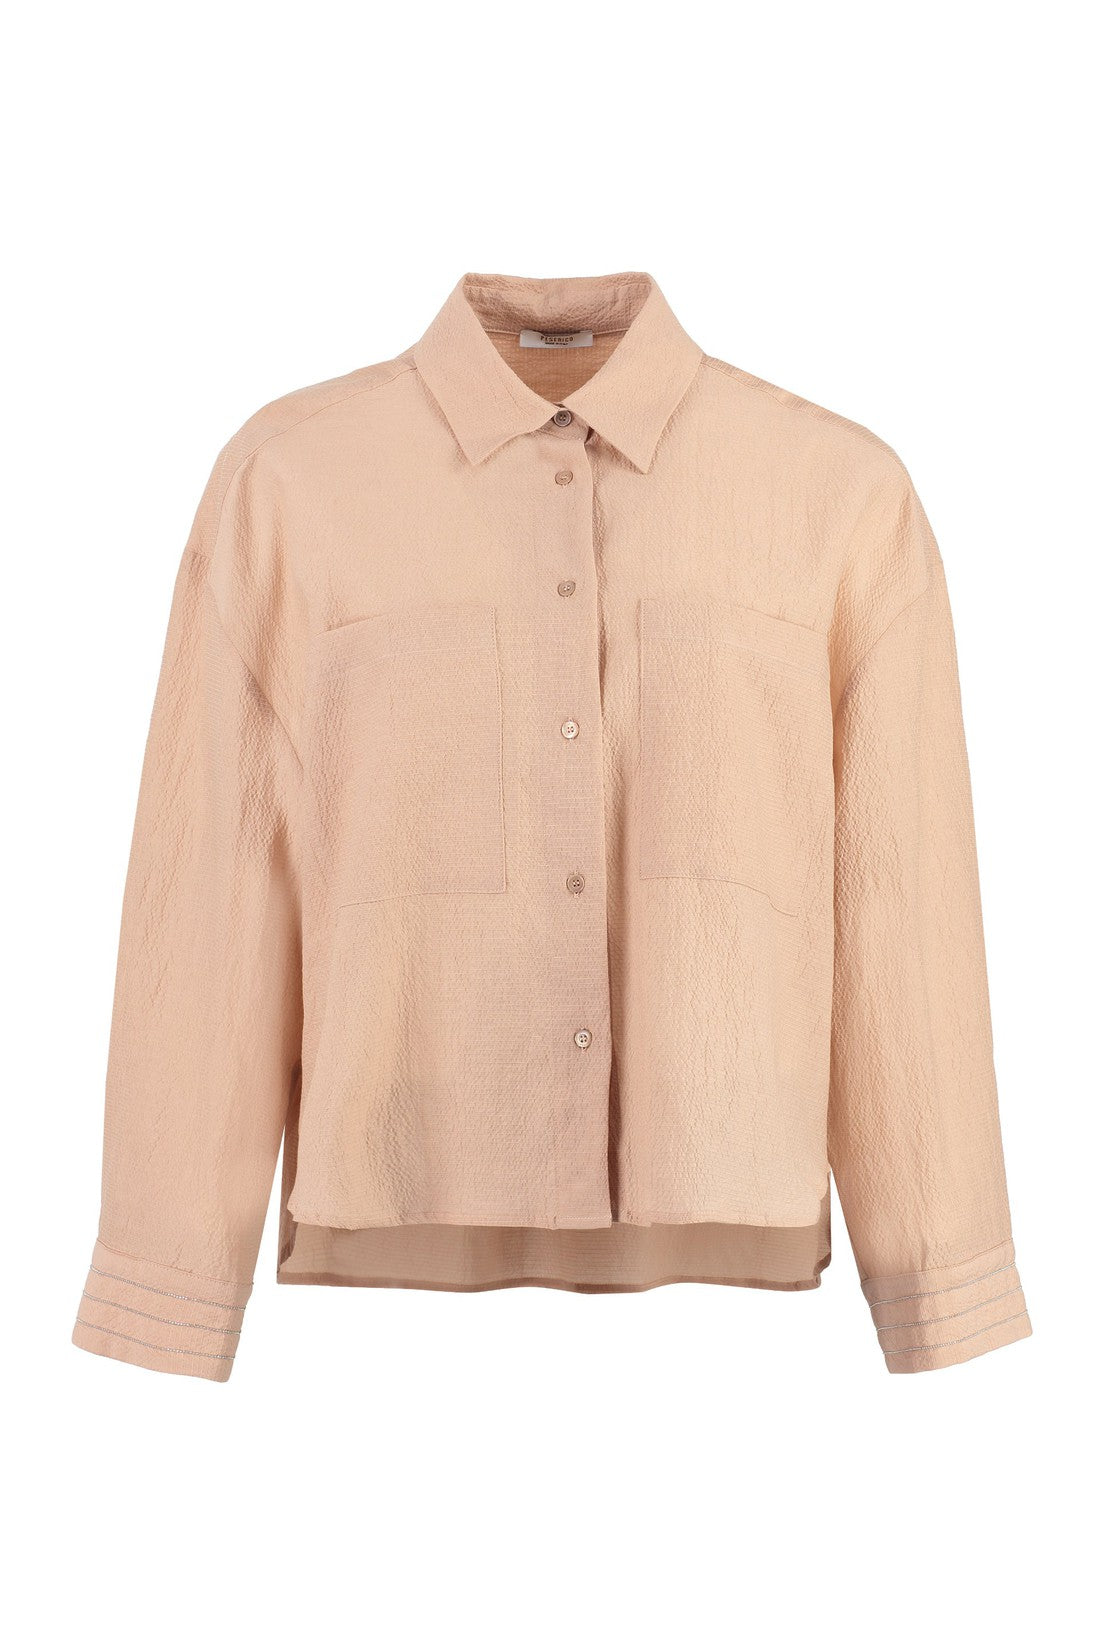 Peserico-OUTLET-SALE-Silk-cotton blend shirt-ARCHIVIST